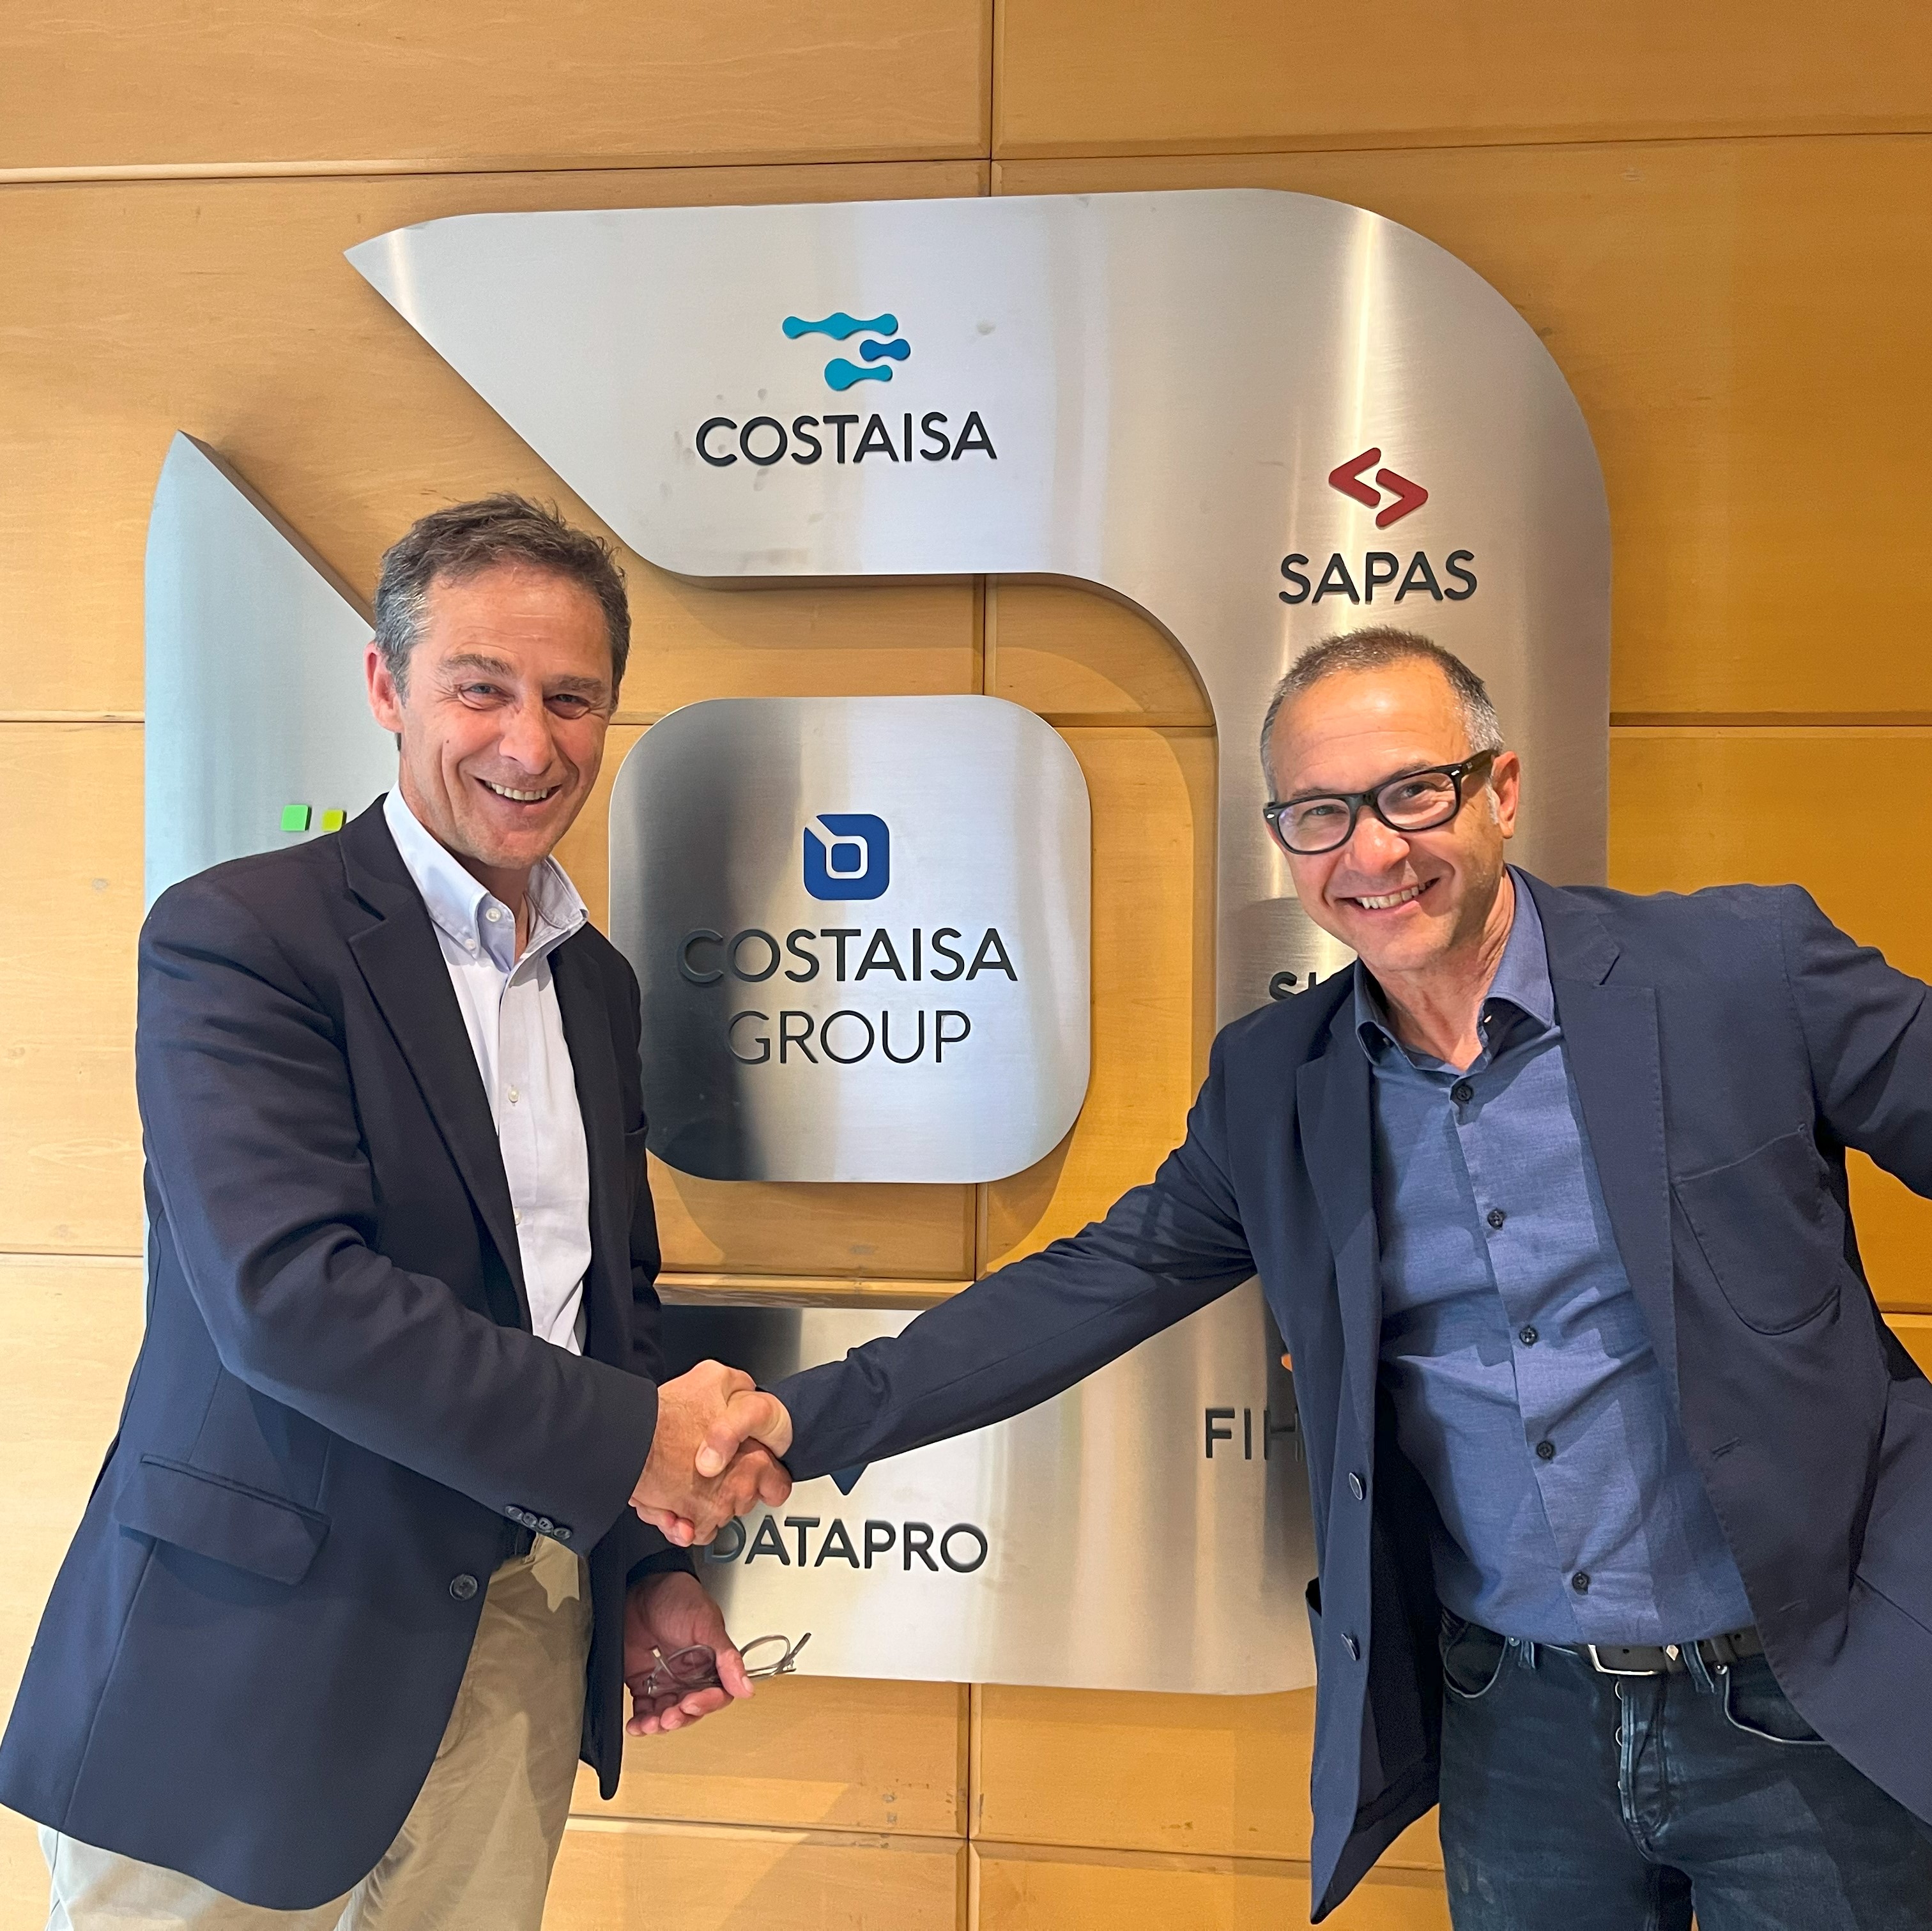 Davinci TI s’incorpora a Costaisa Group per reforçar l’aposta pel desenvolupament de plataformes digitals segures al núvol